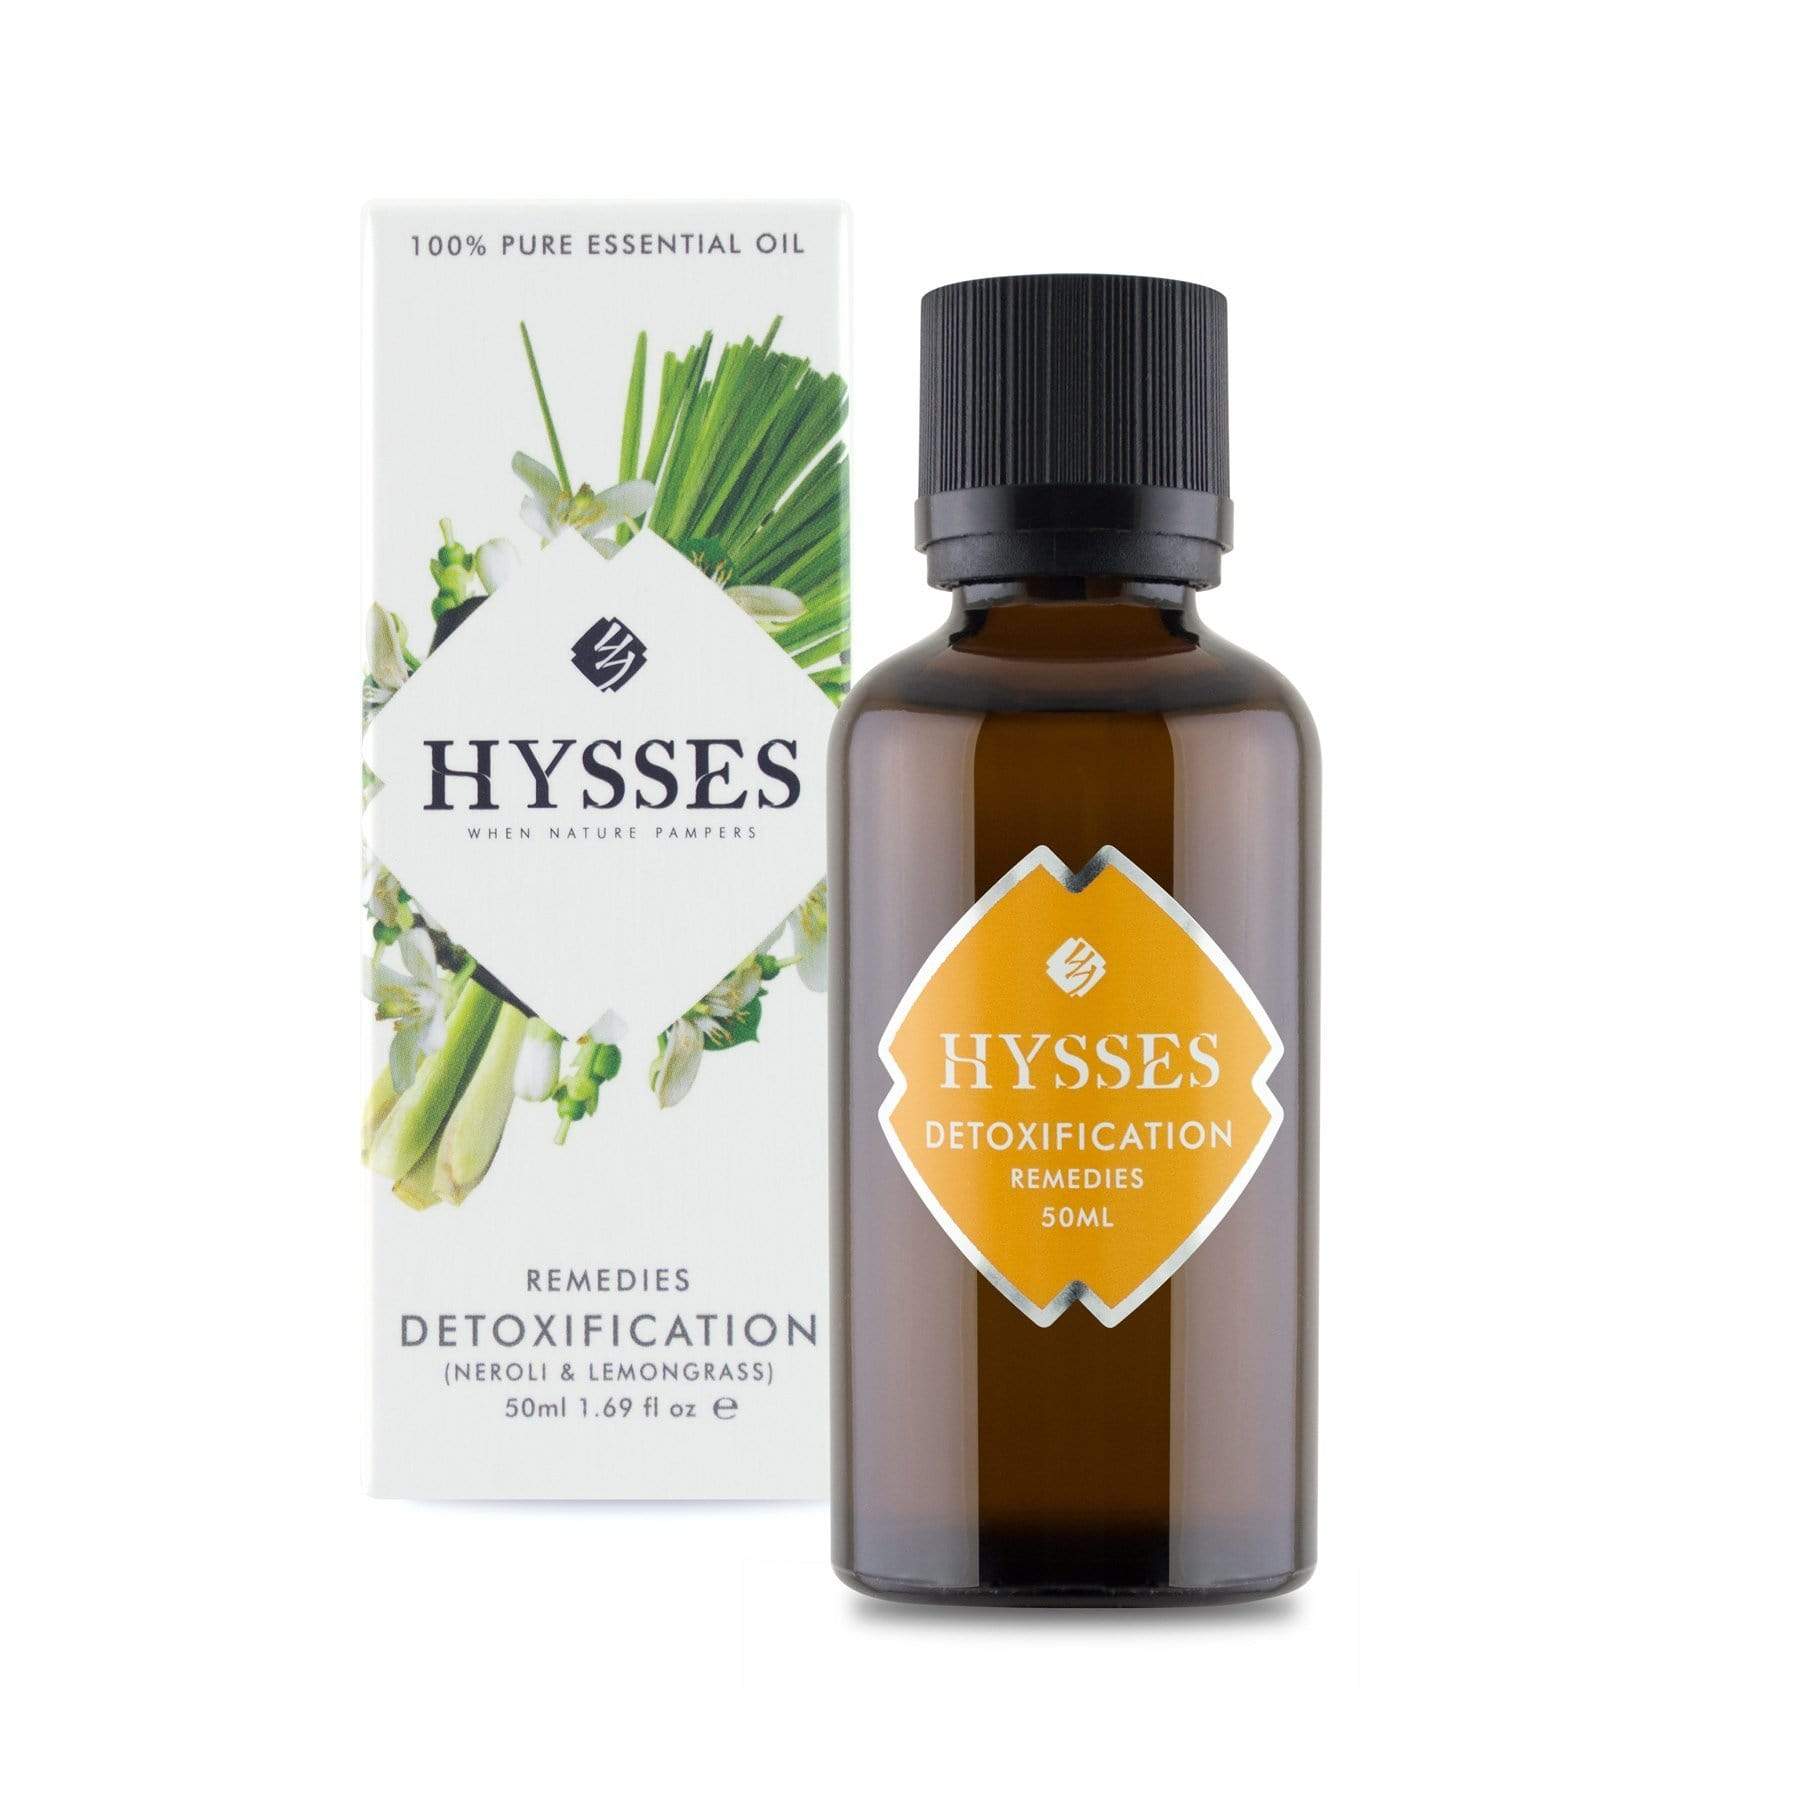 Hysses Essential Oil 50ml Remedies, Detoxification 50ml